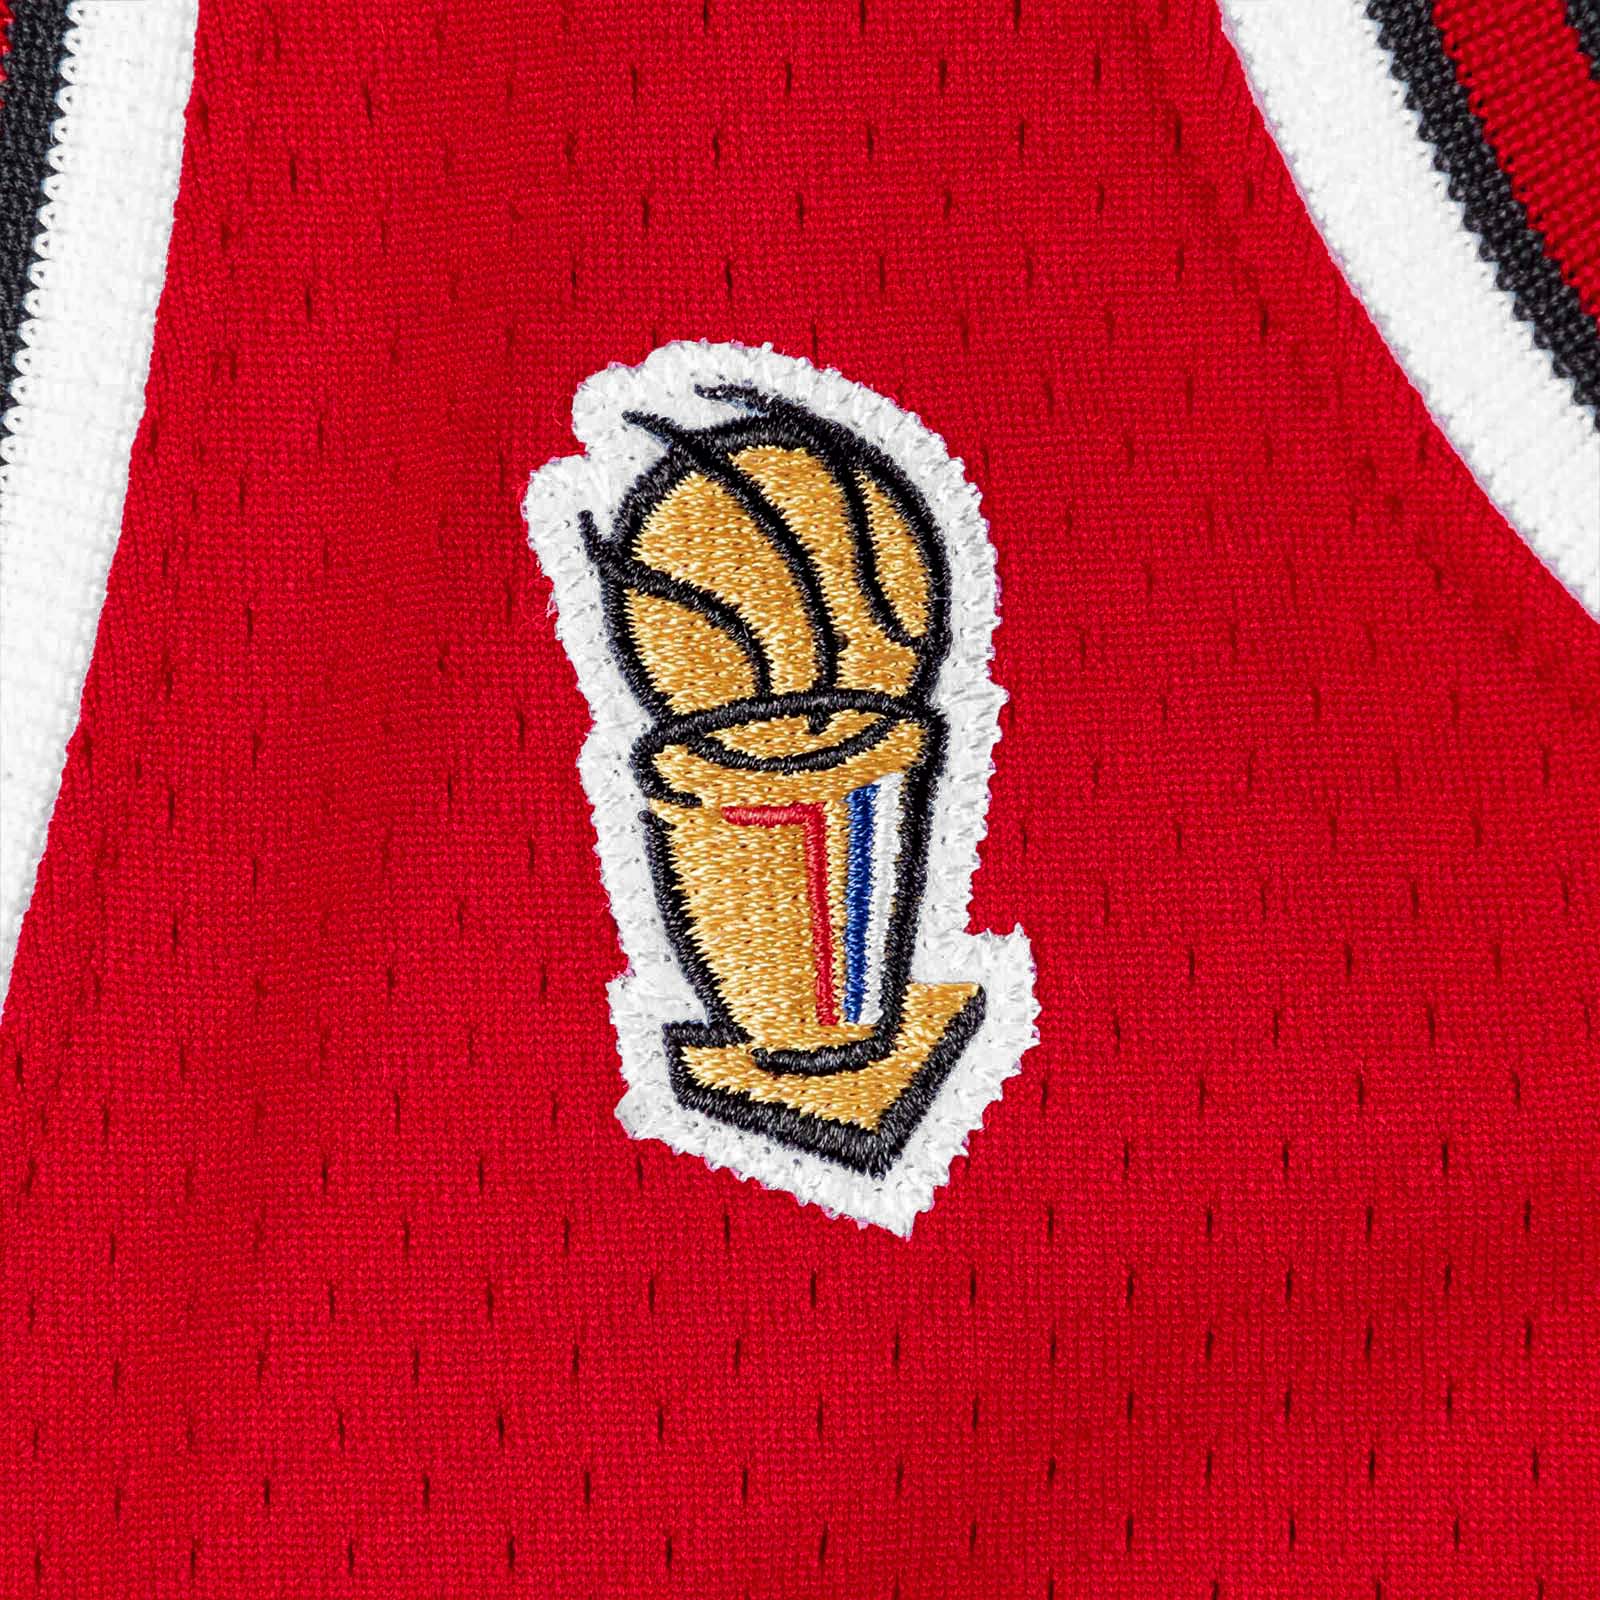 Jordan 95-96 Chicago Bulls Authentic Jersey